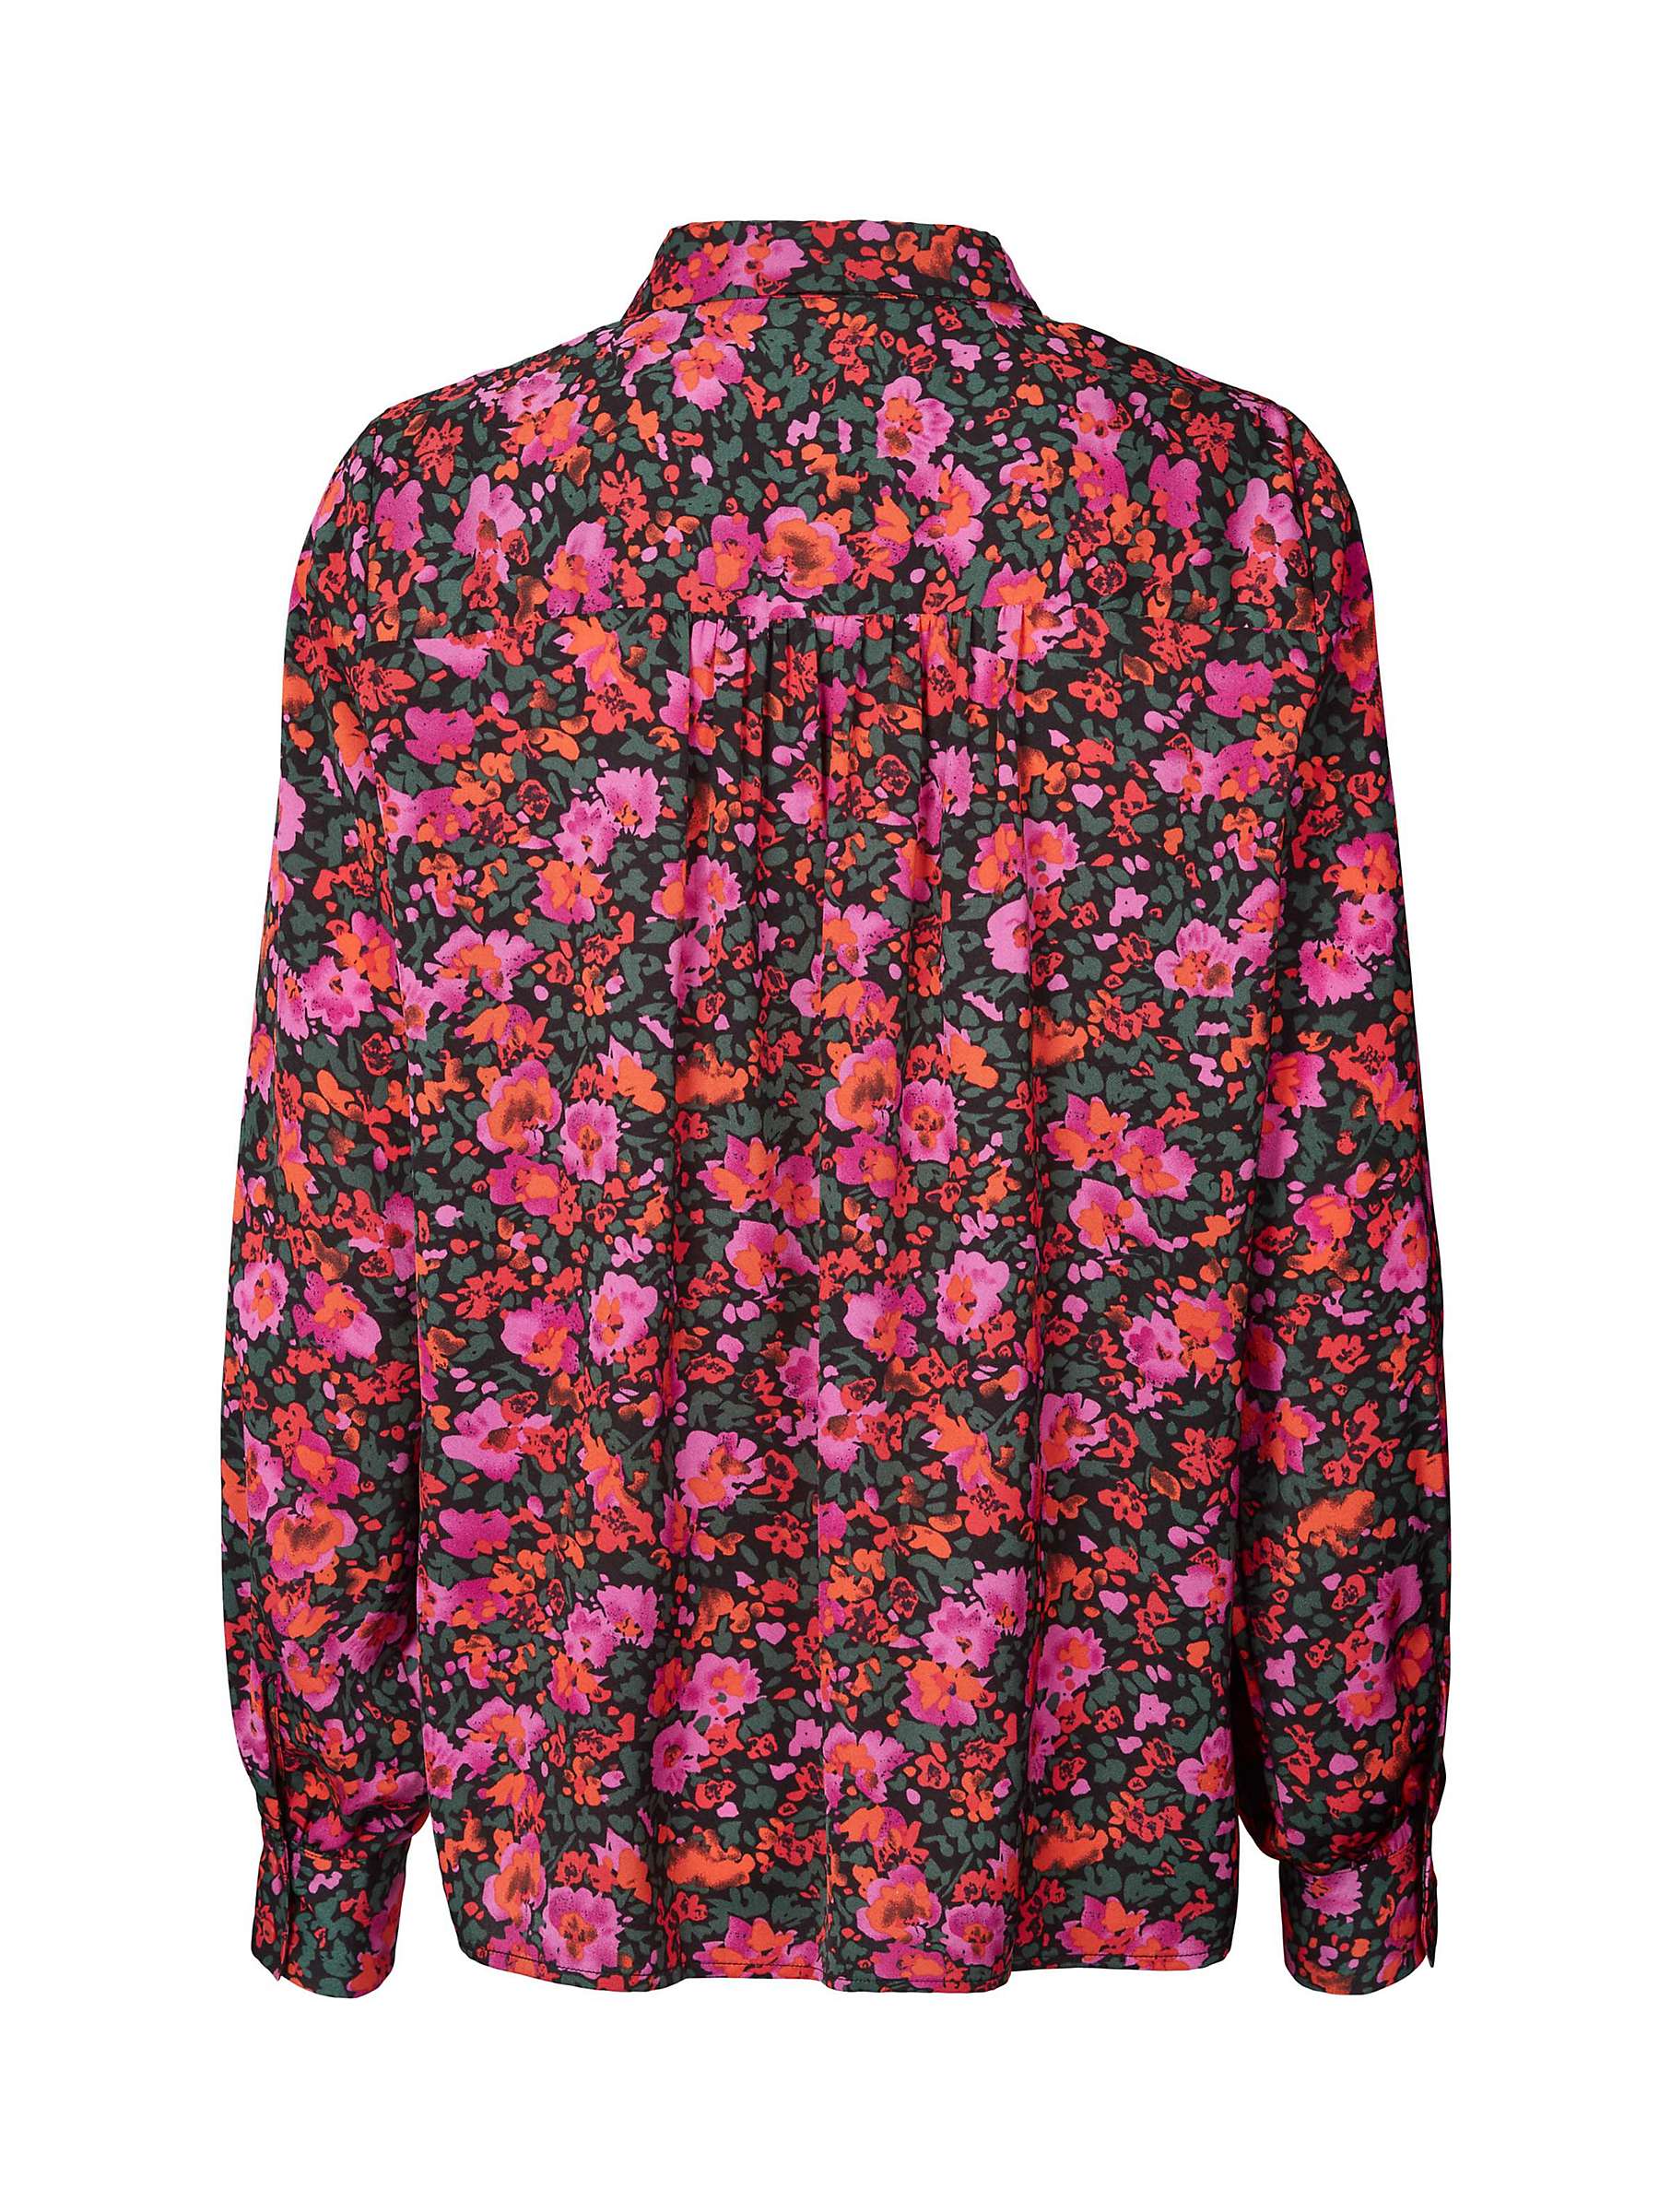 Buy Lollys Laundry Allison Floral Print Shirt, Red Online at johnlewis.com